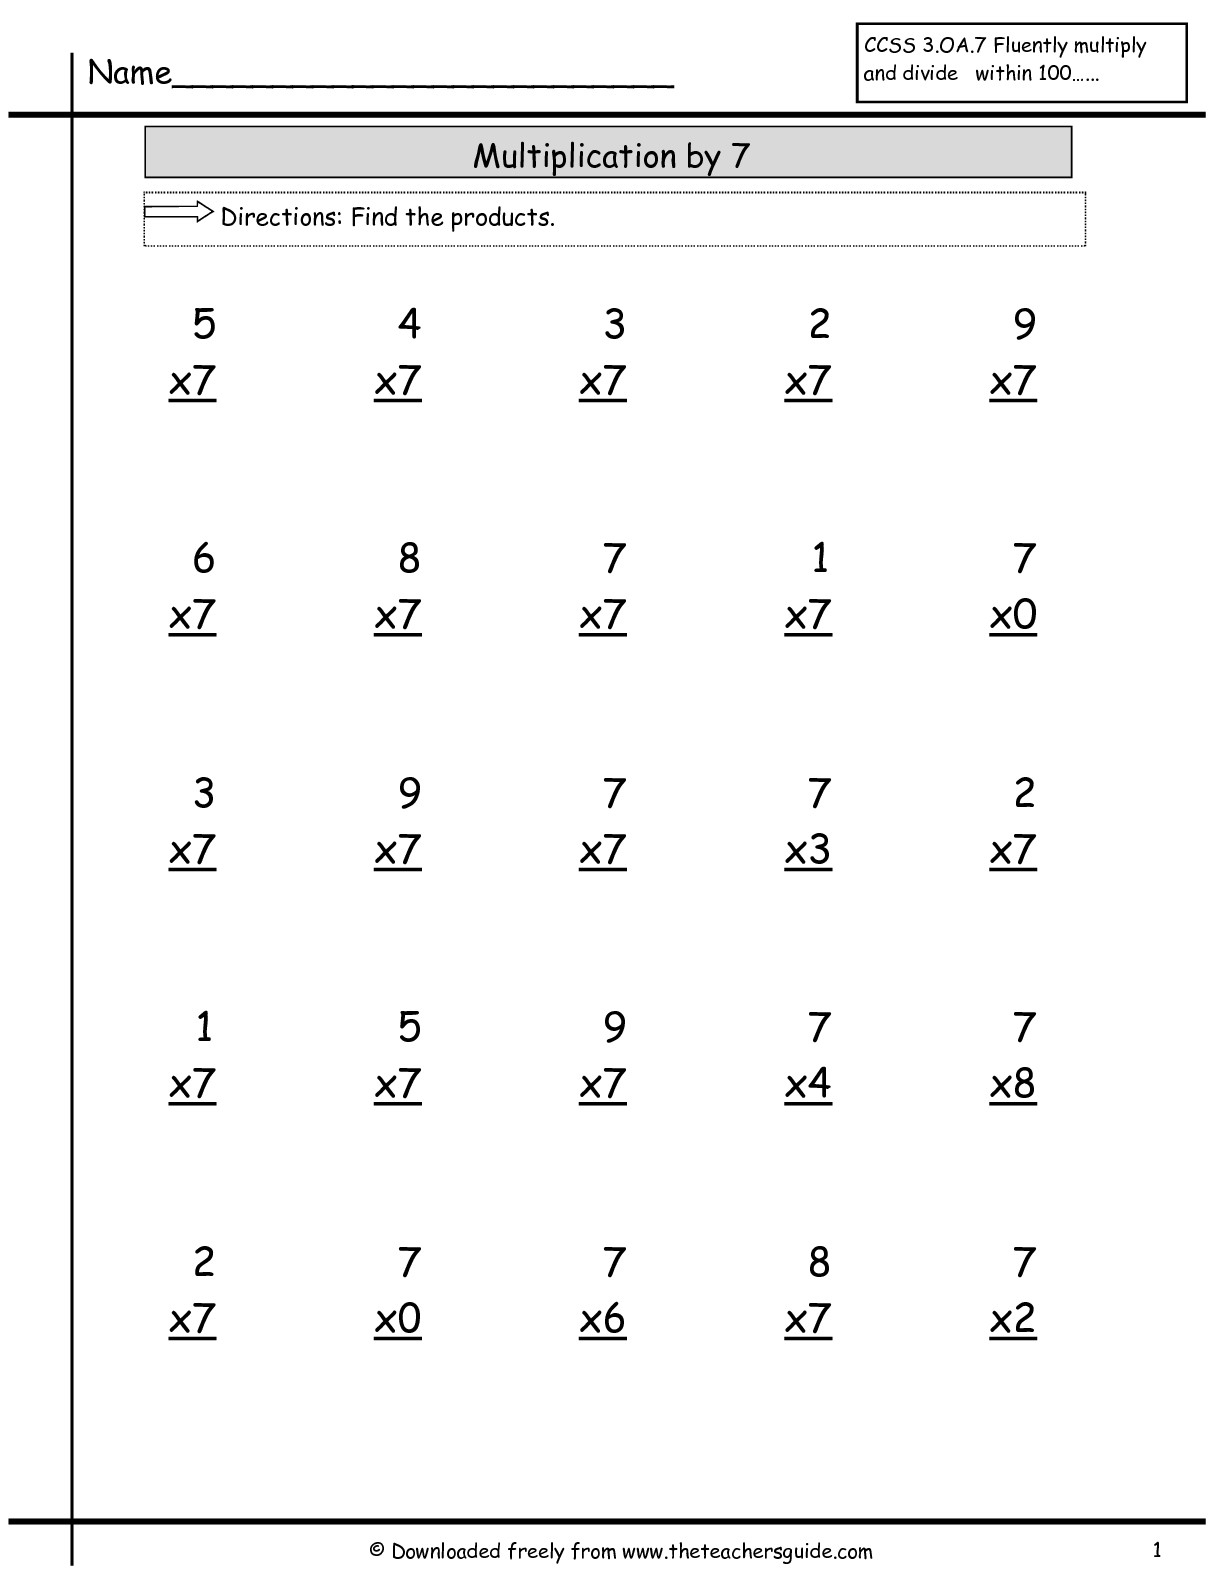  Multiplication Worksheets 6 7 8 9 PrintableMultiplication